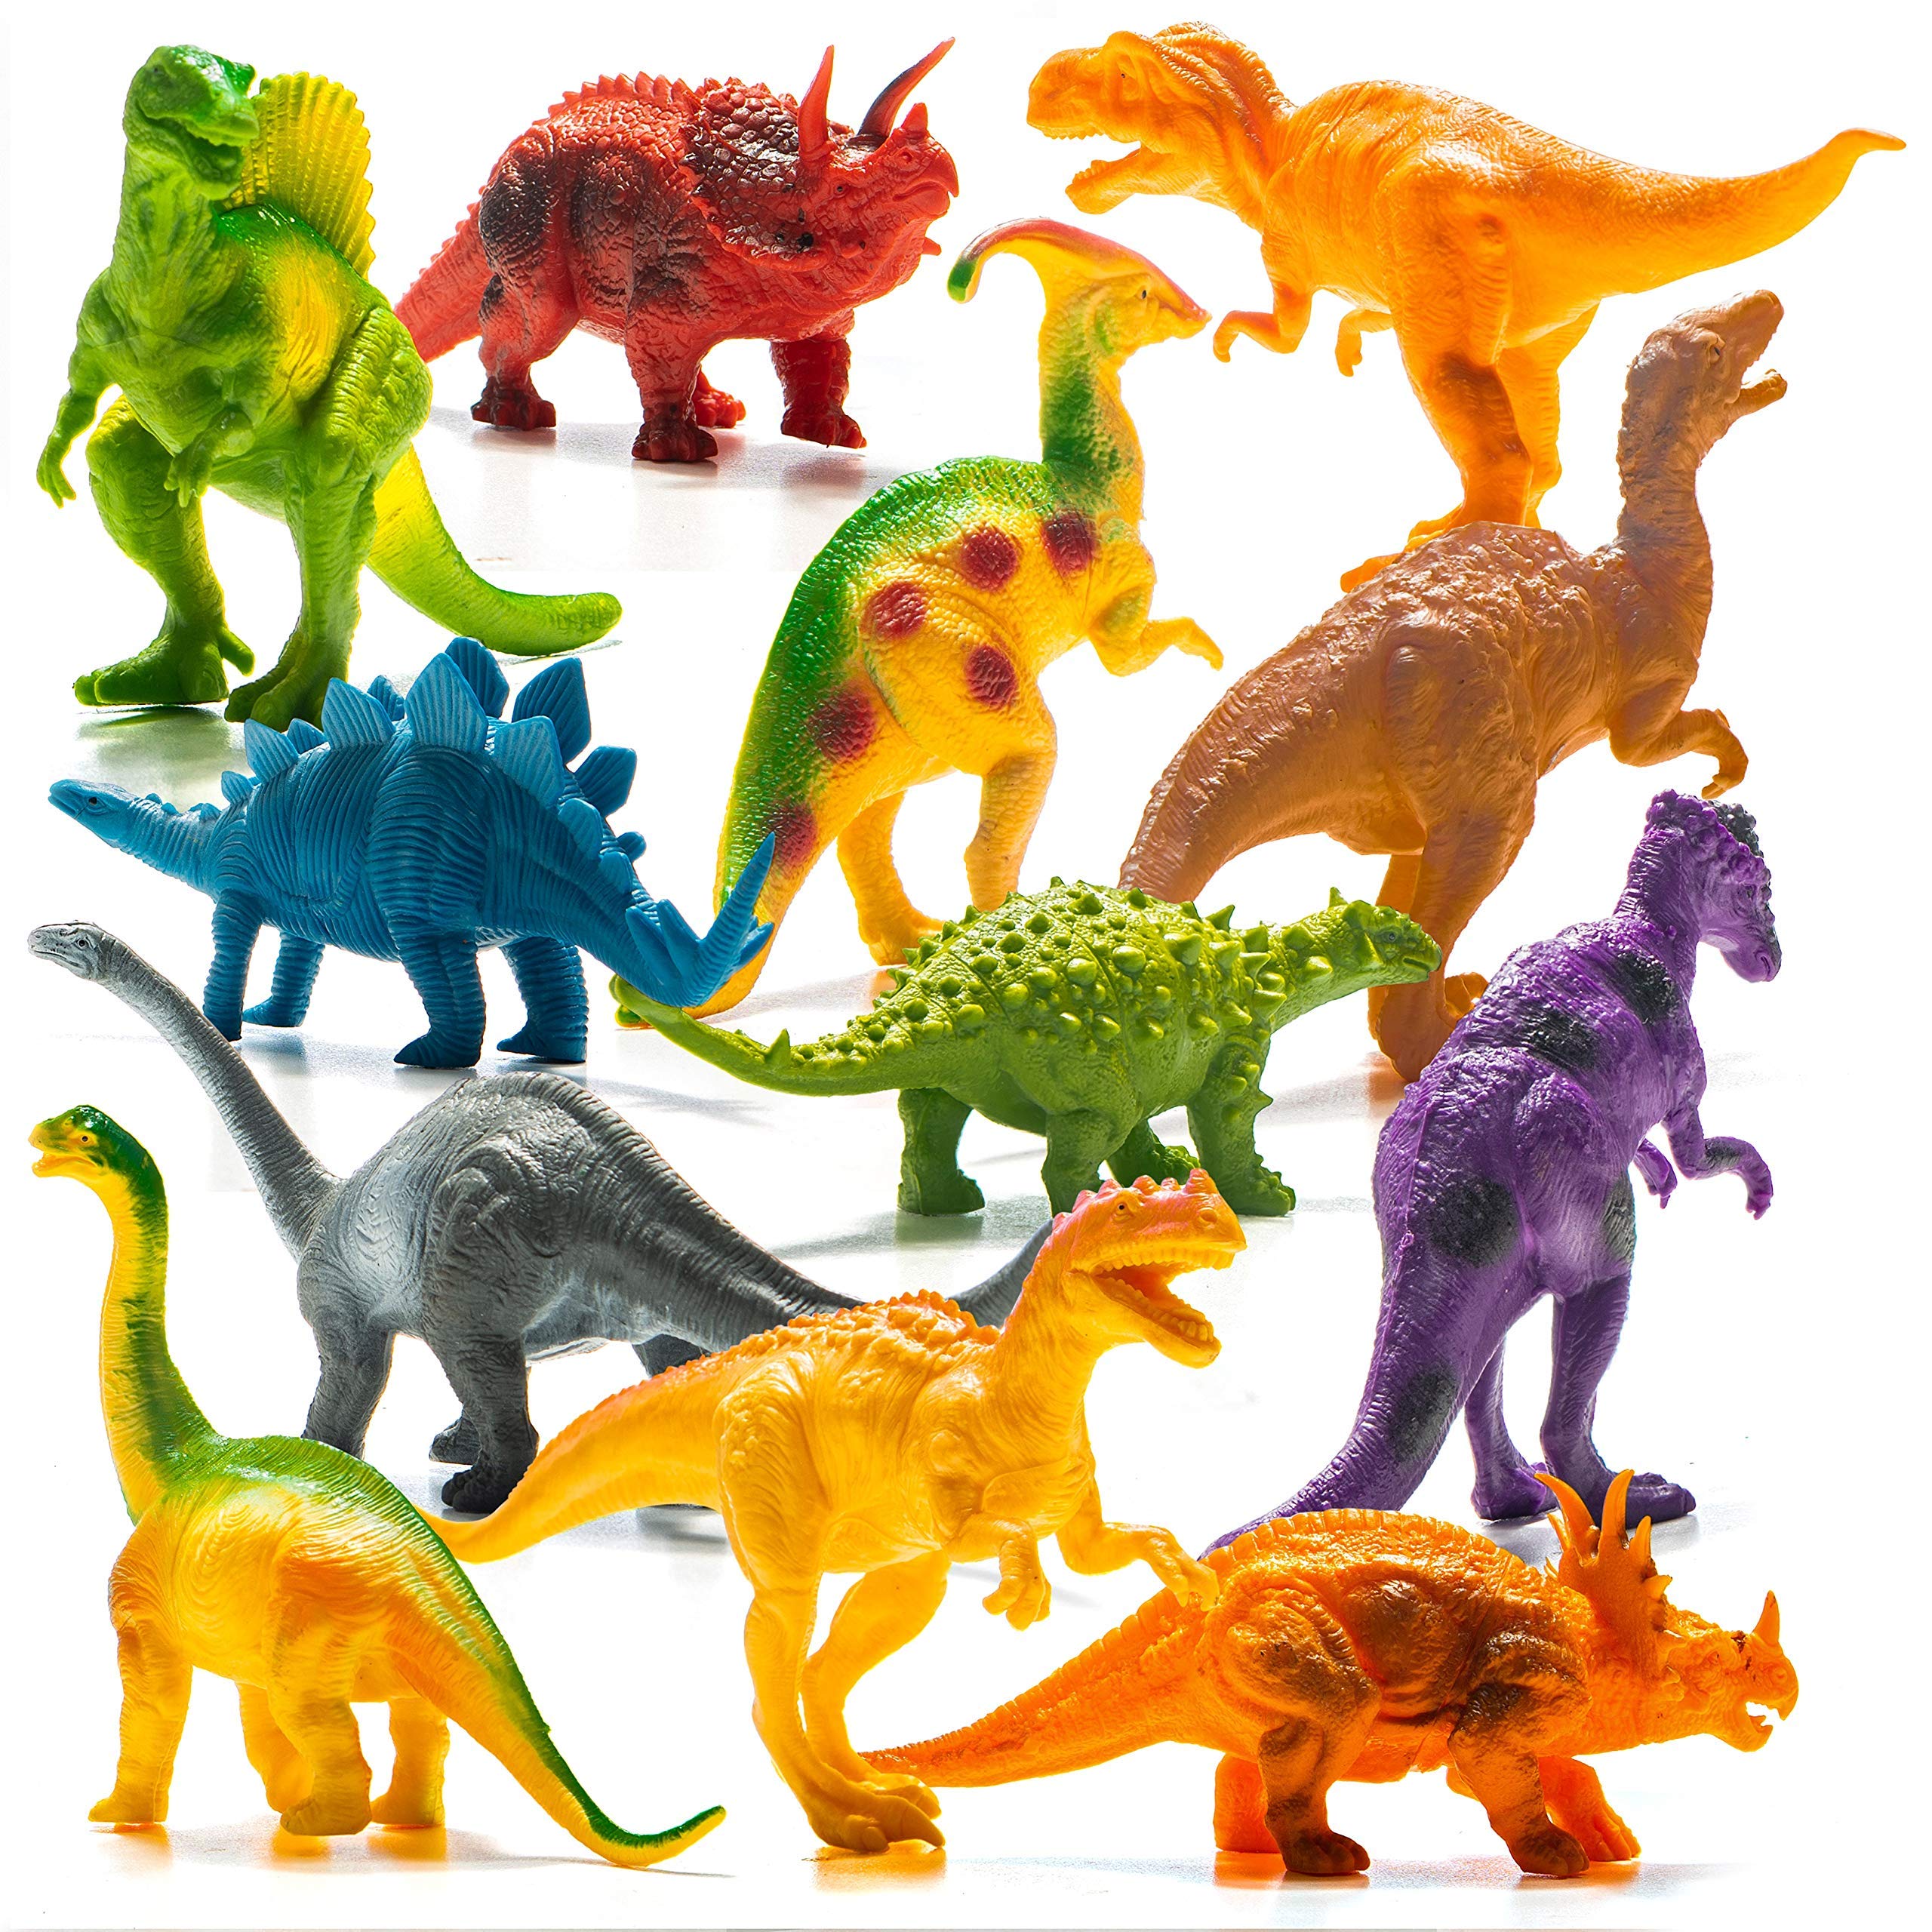 PREXTEX Dinosaur Figures for Kids 3-5+ (12 Plastic Dinosaurs with Educational Dinosaur Book) Dinosaur Toys Set for Toddlers Learning & Development (Boys & Girls)